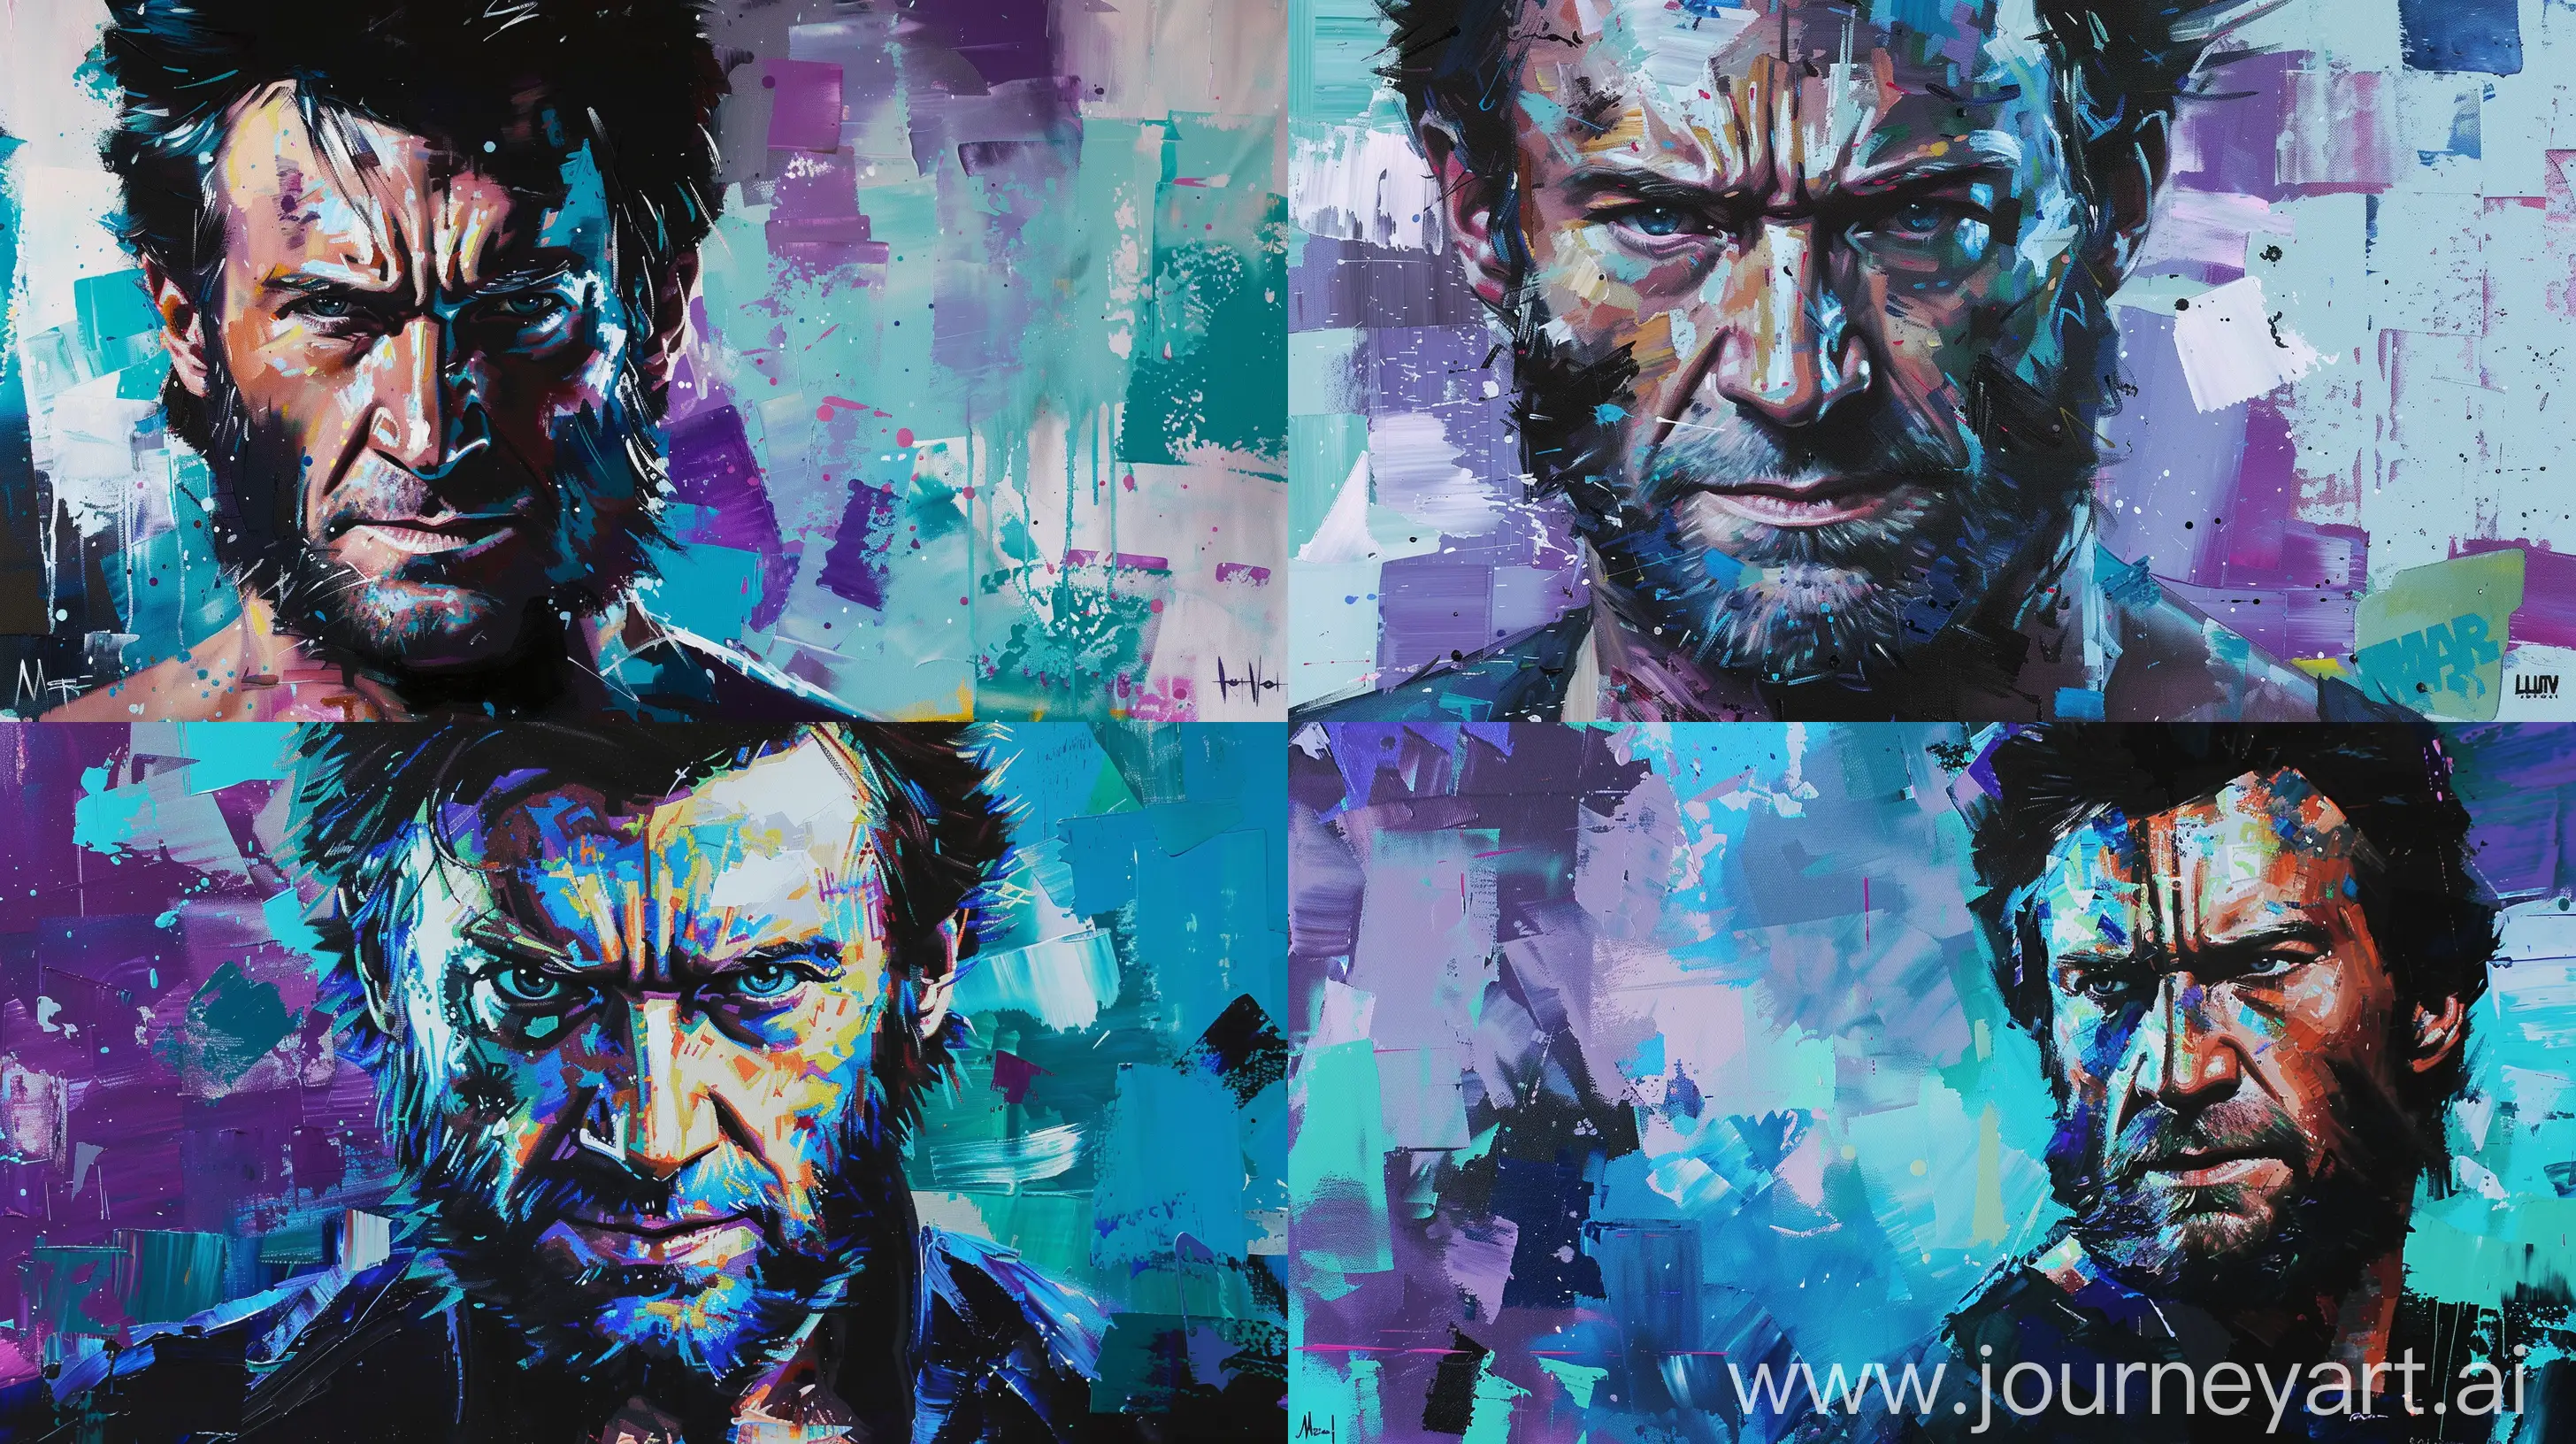 Hugh-Jackman-as-Wolverine-Star-Wars-Style-Oil-Painting